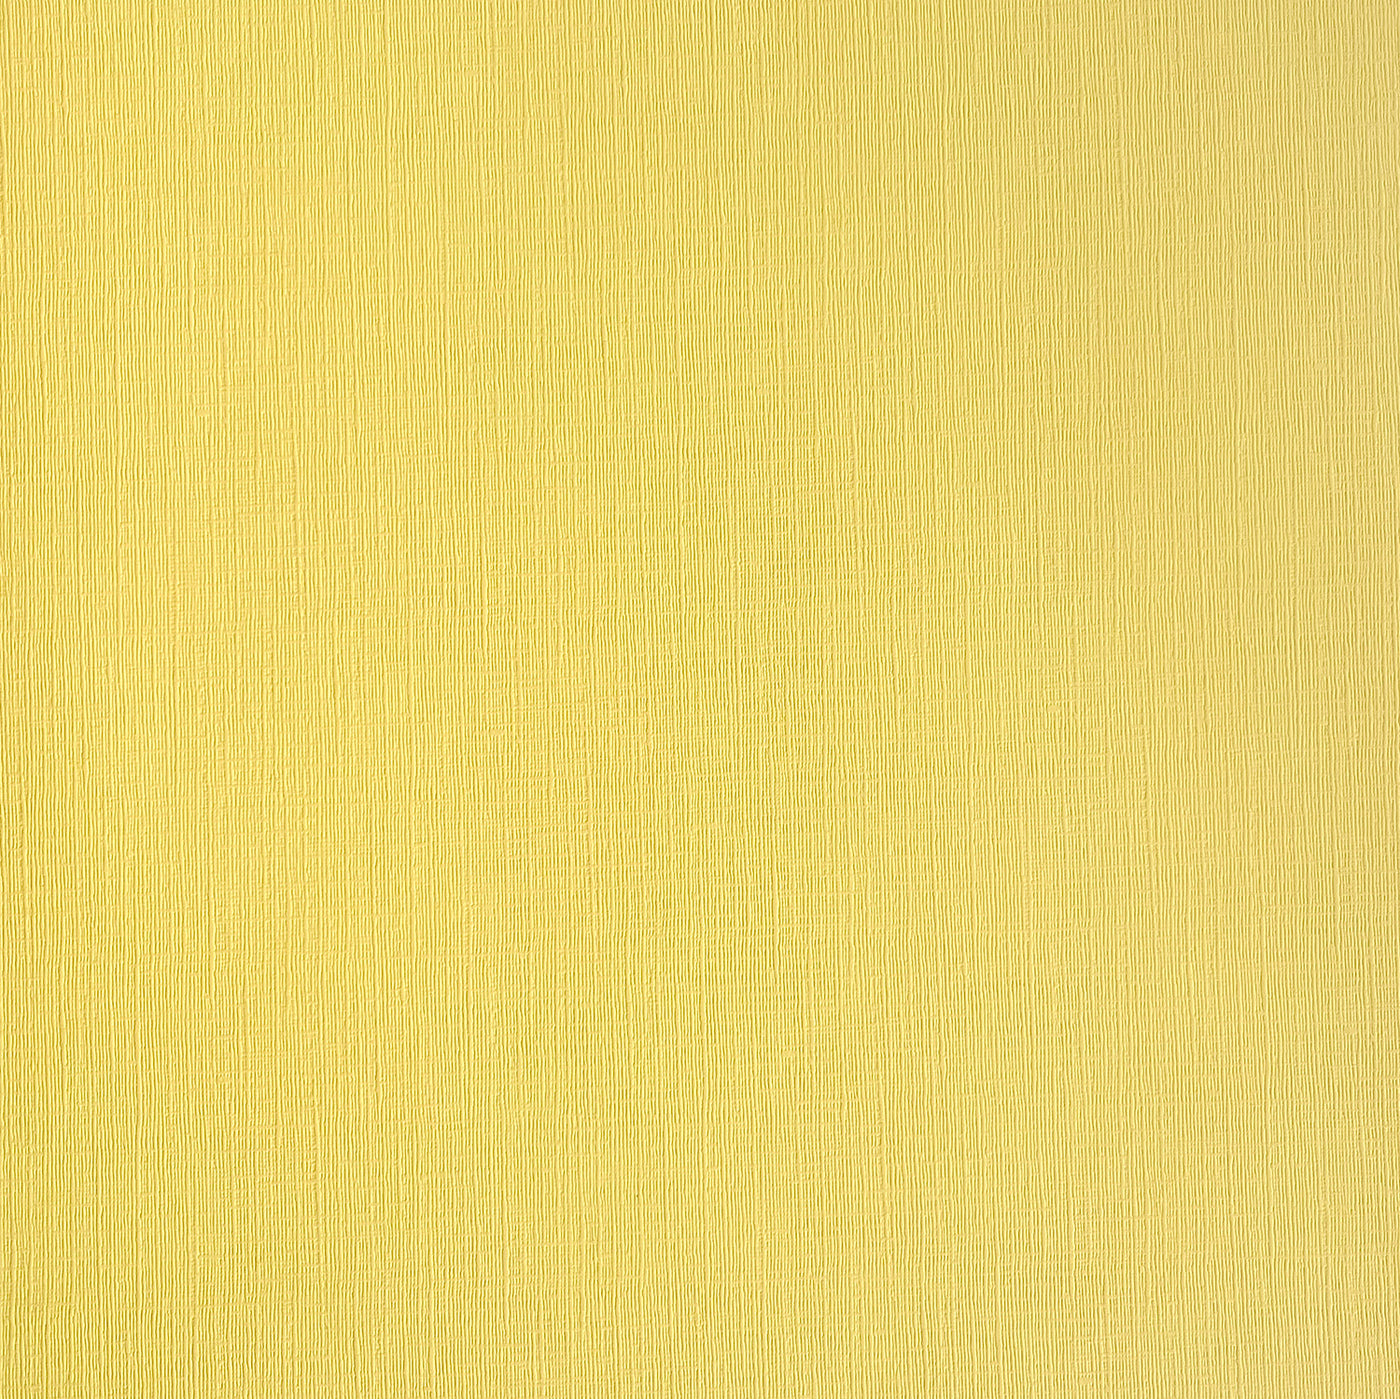 Yellow Corn - Textured 12x12 Cardstock - Pale yellow canvas scrapbook paper